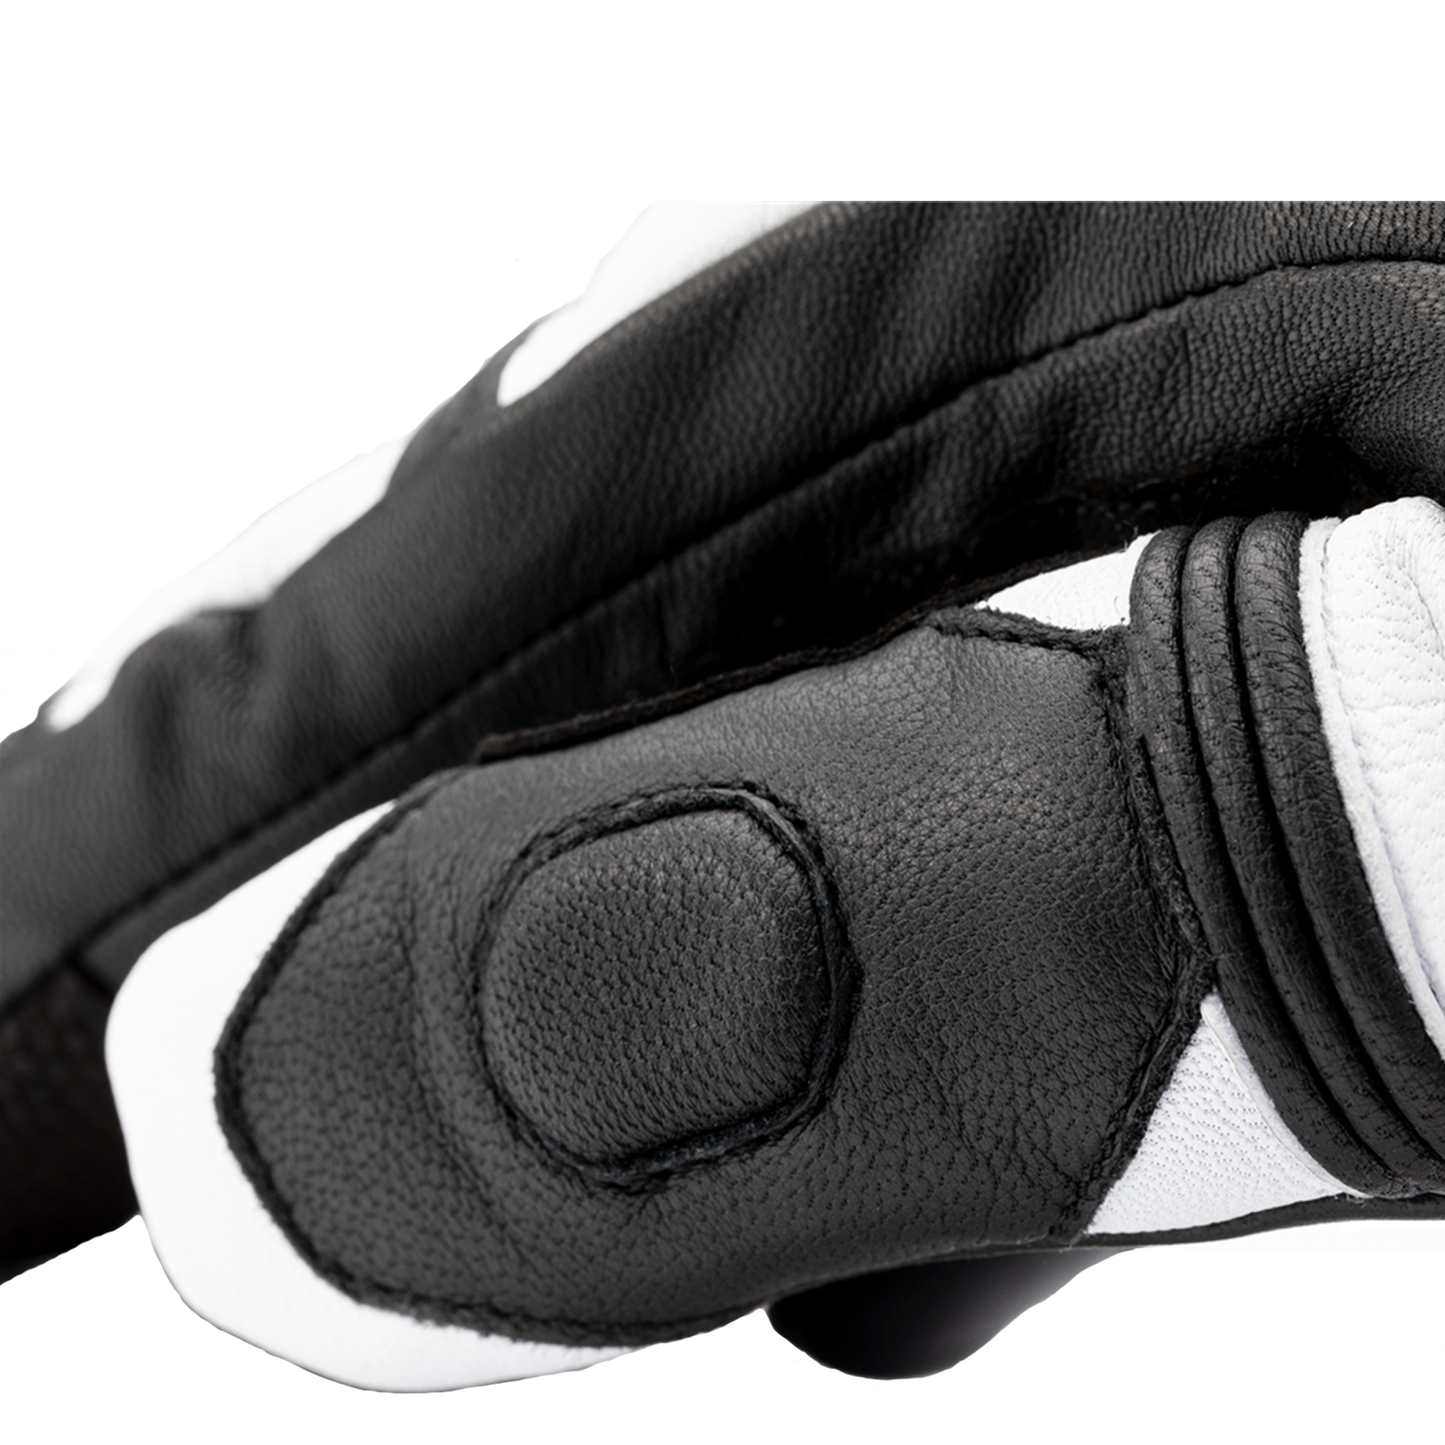 RST Sport Mid CE Men’s Waterproof Glove - White/Black (3046)